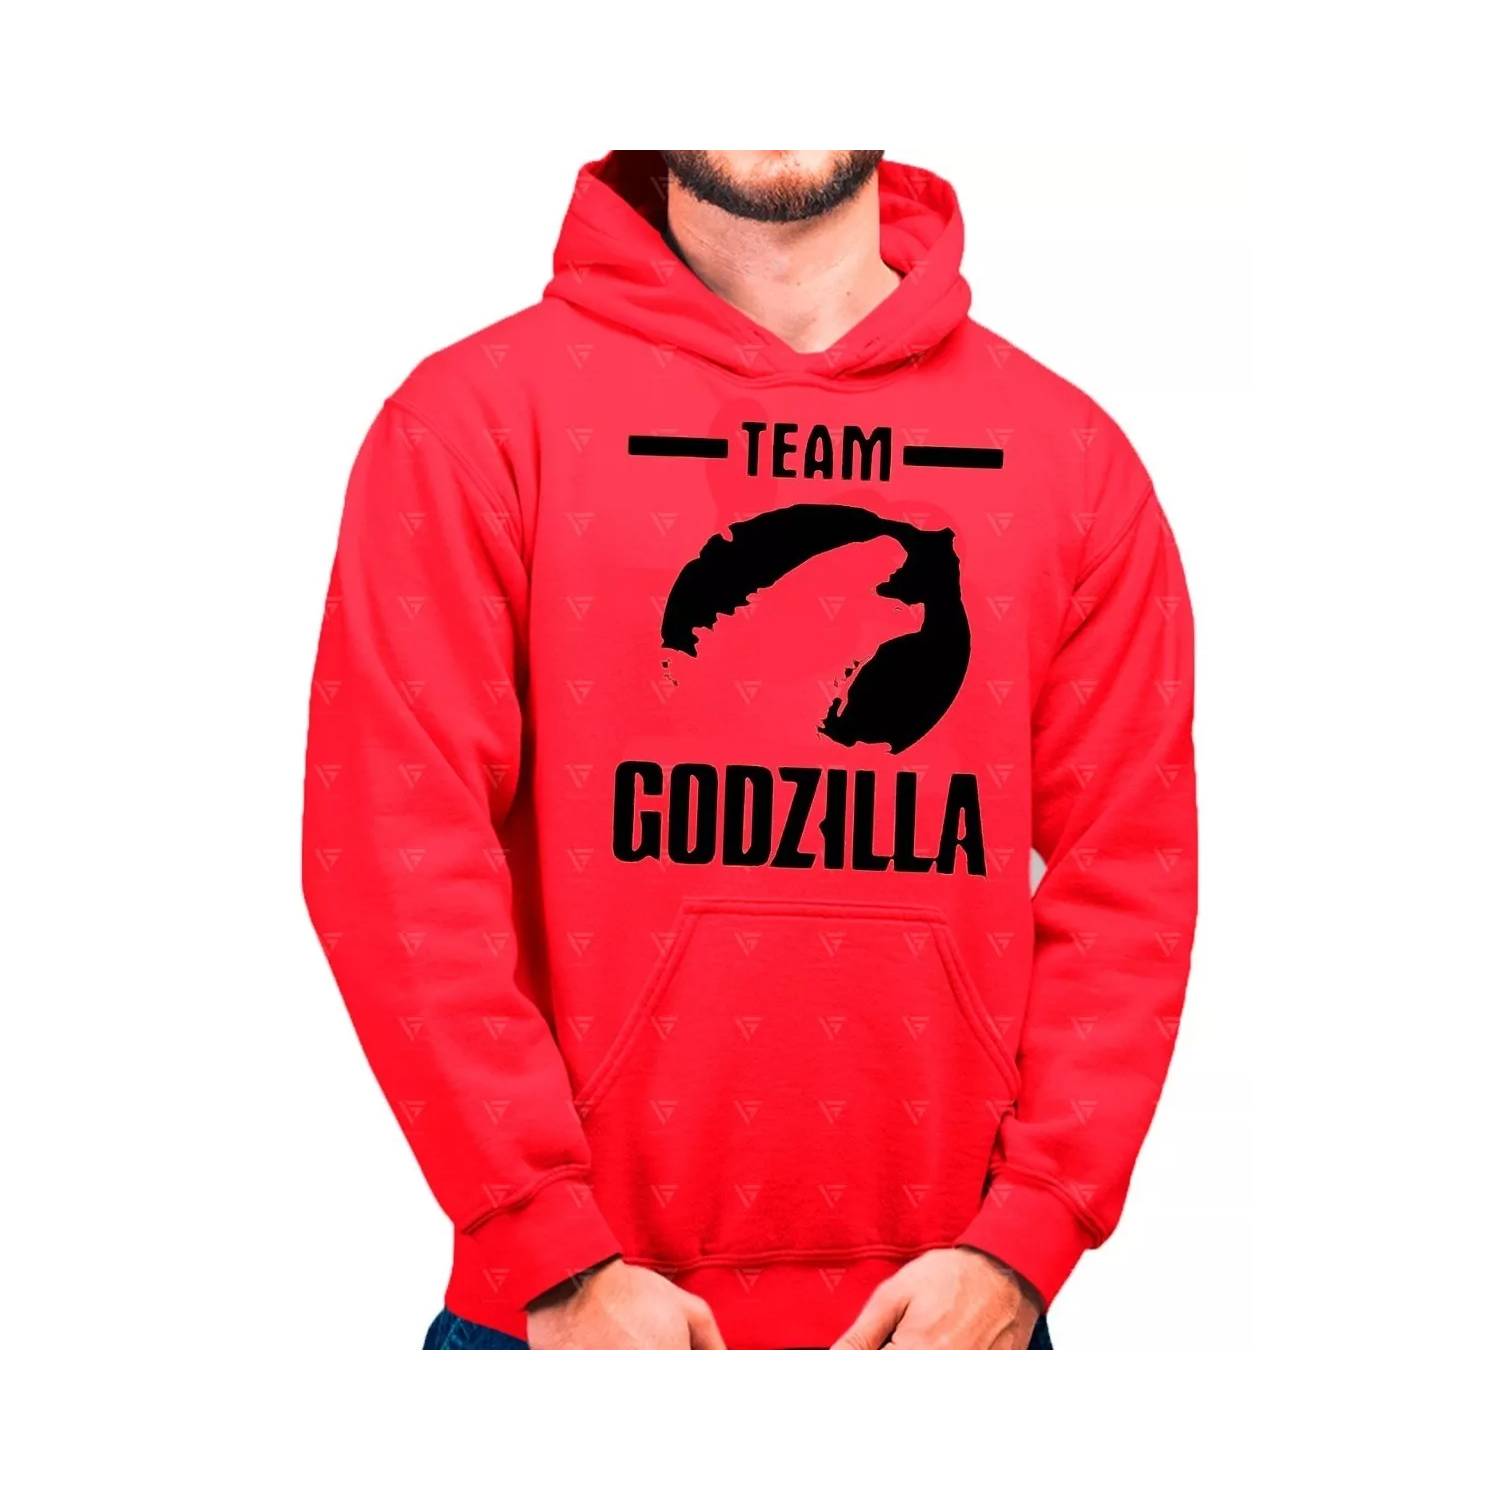 GENERICO Poleron Rojo Hombre Team Godzilla falabella.com